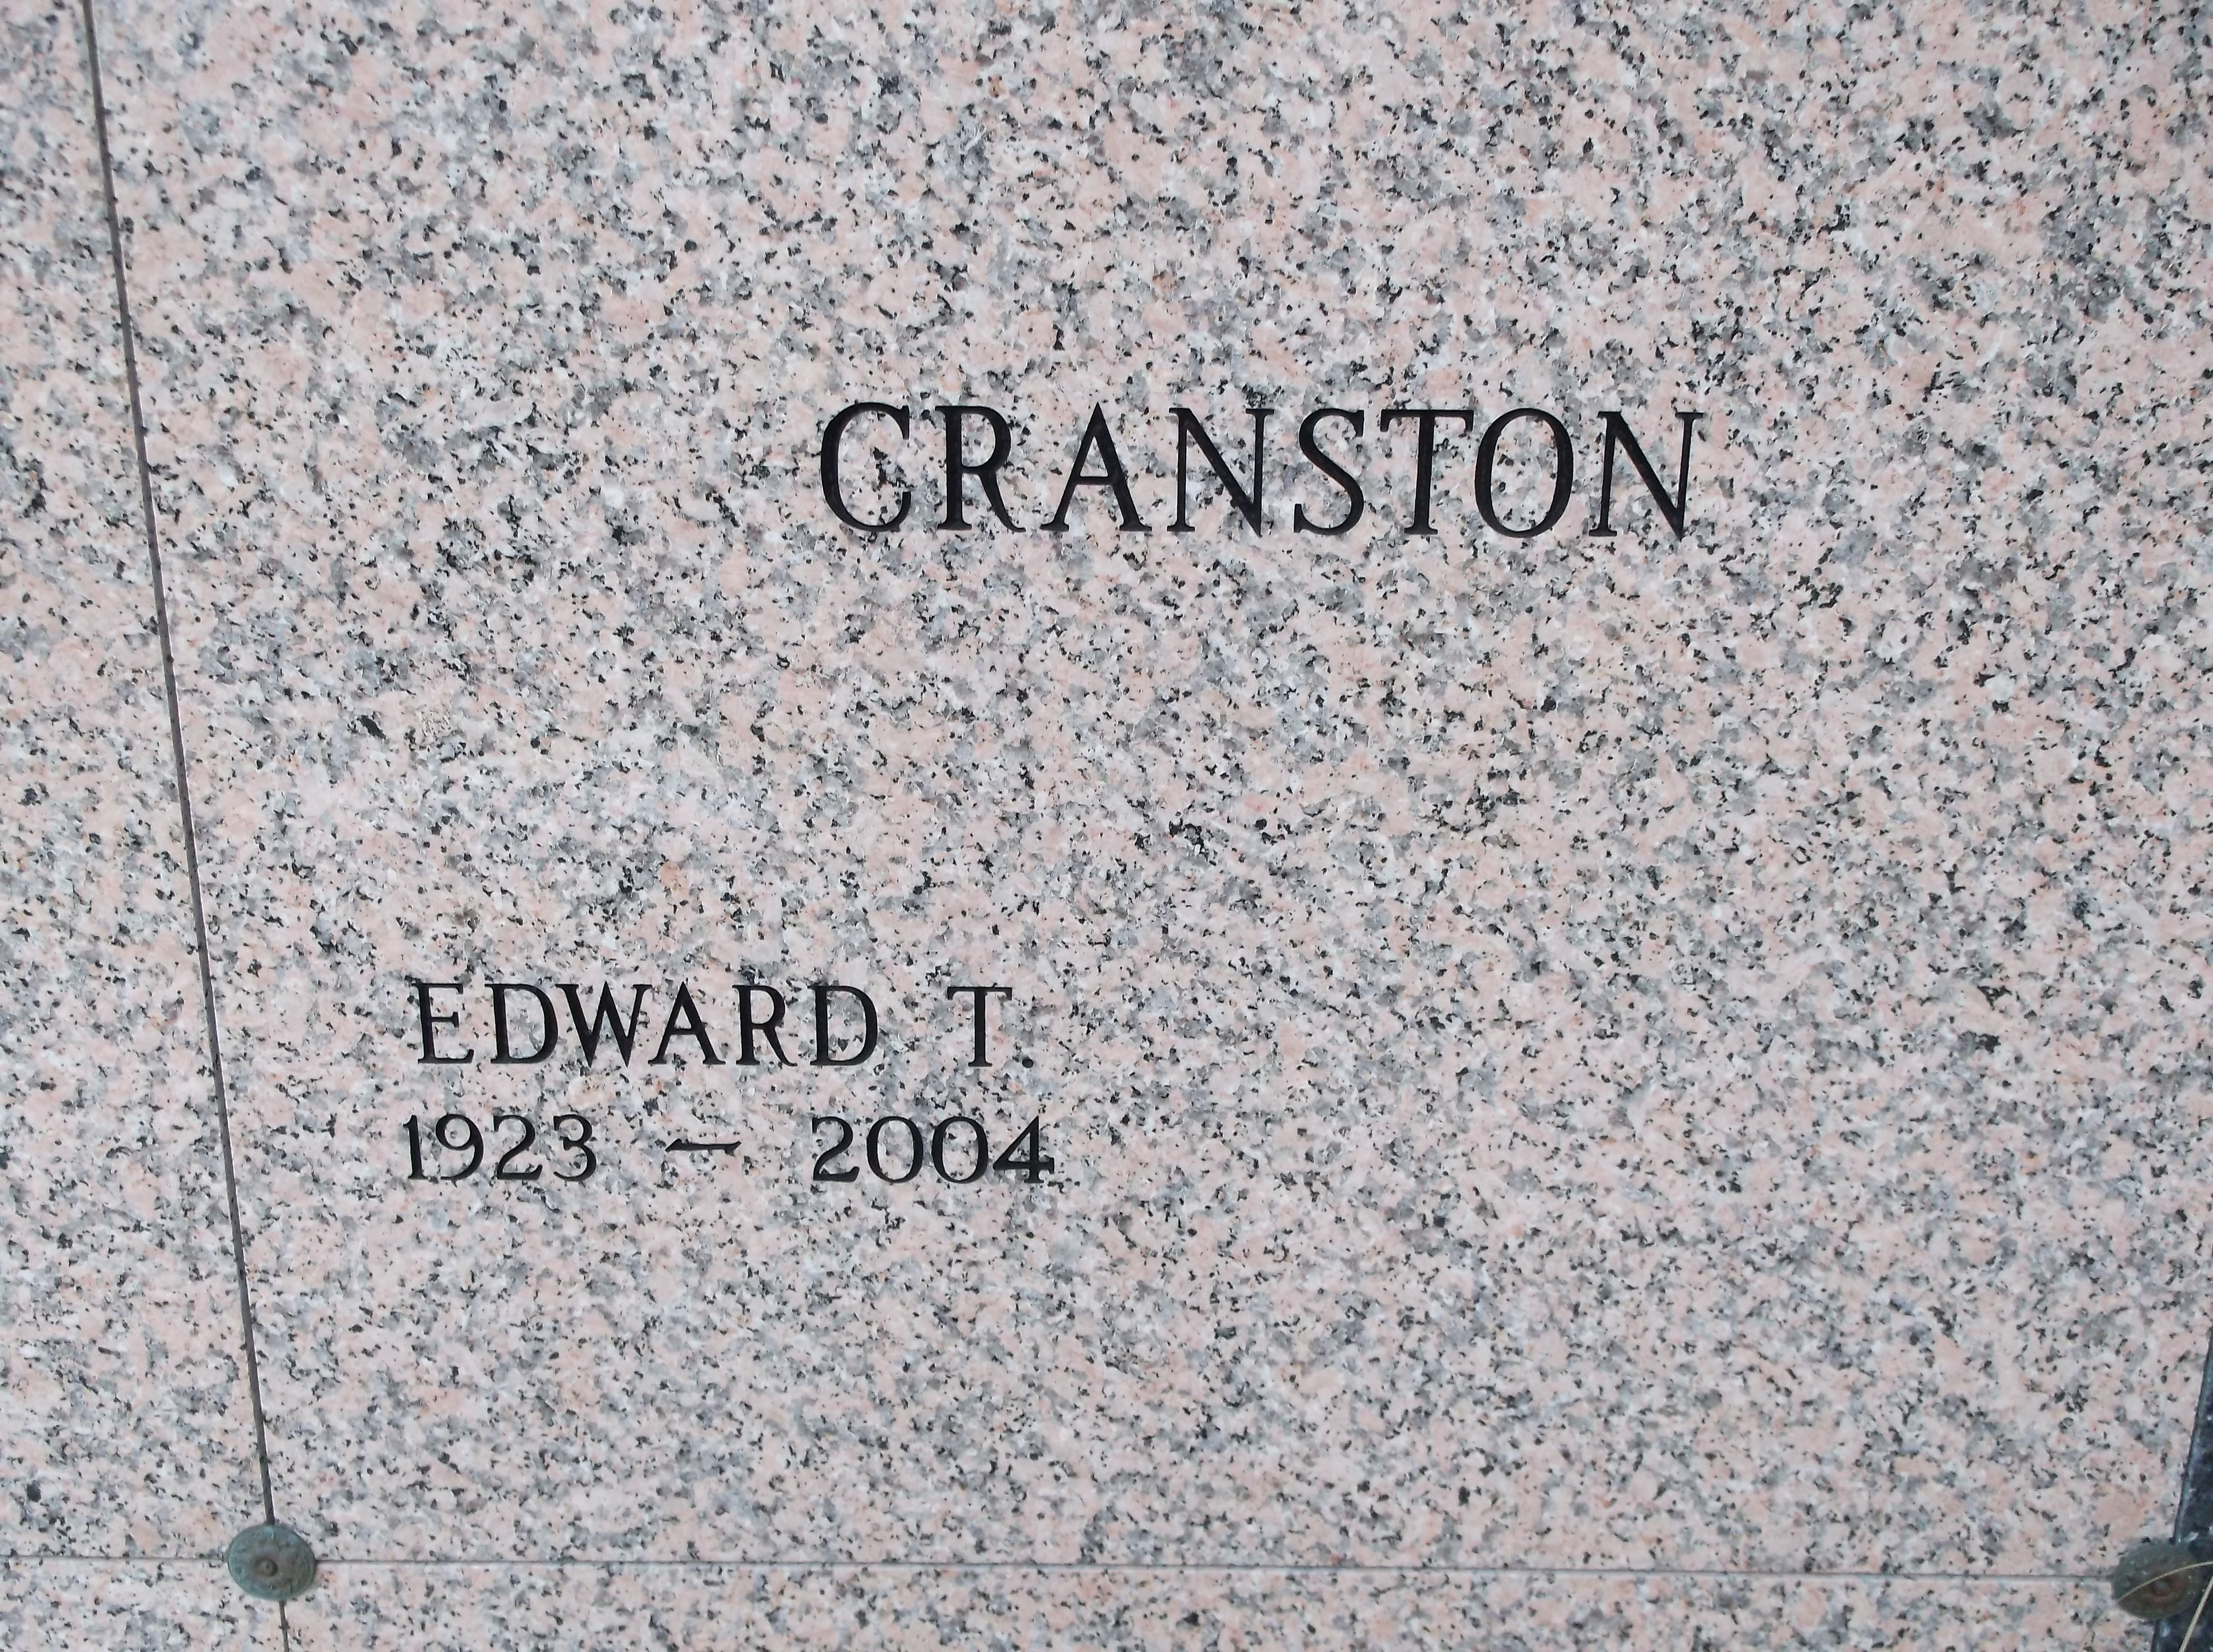 Edward T Granston